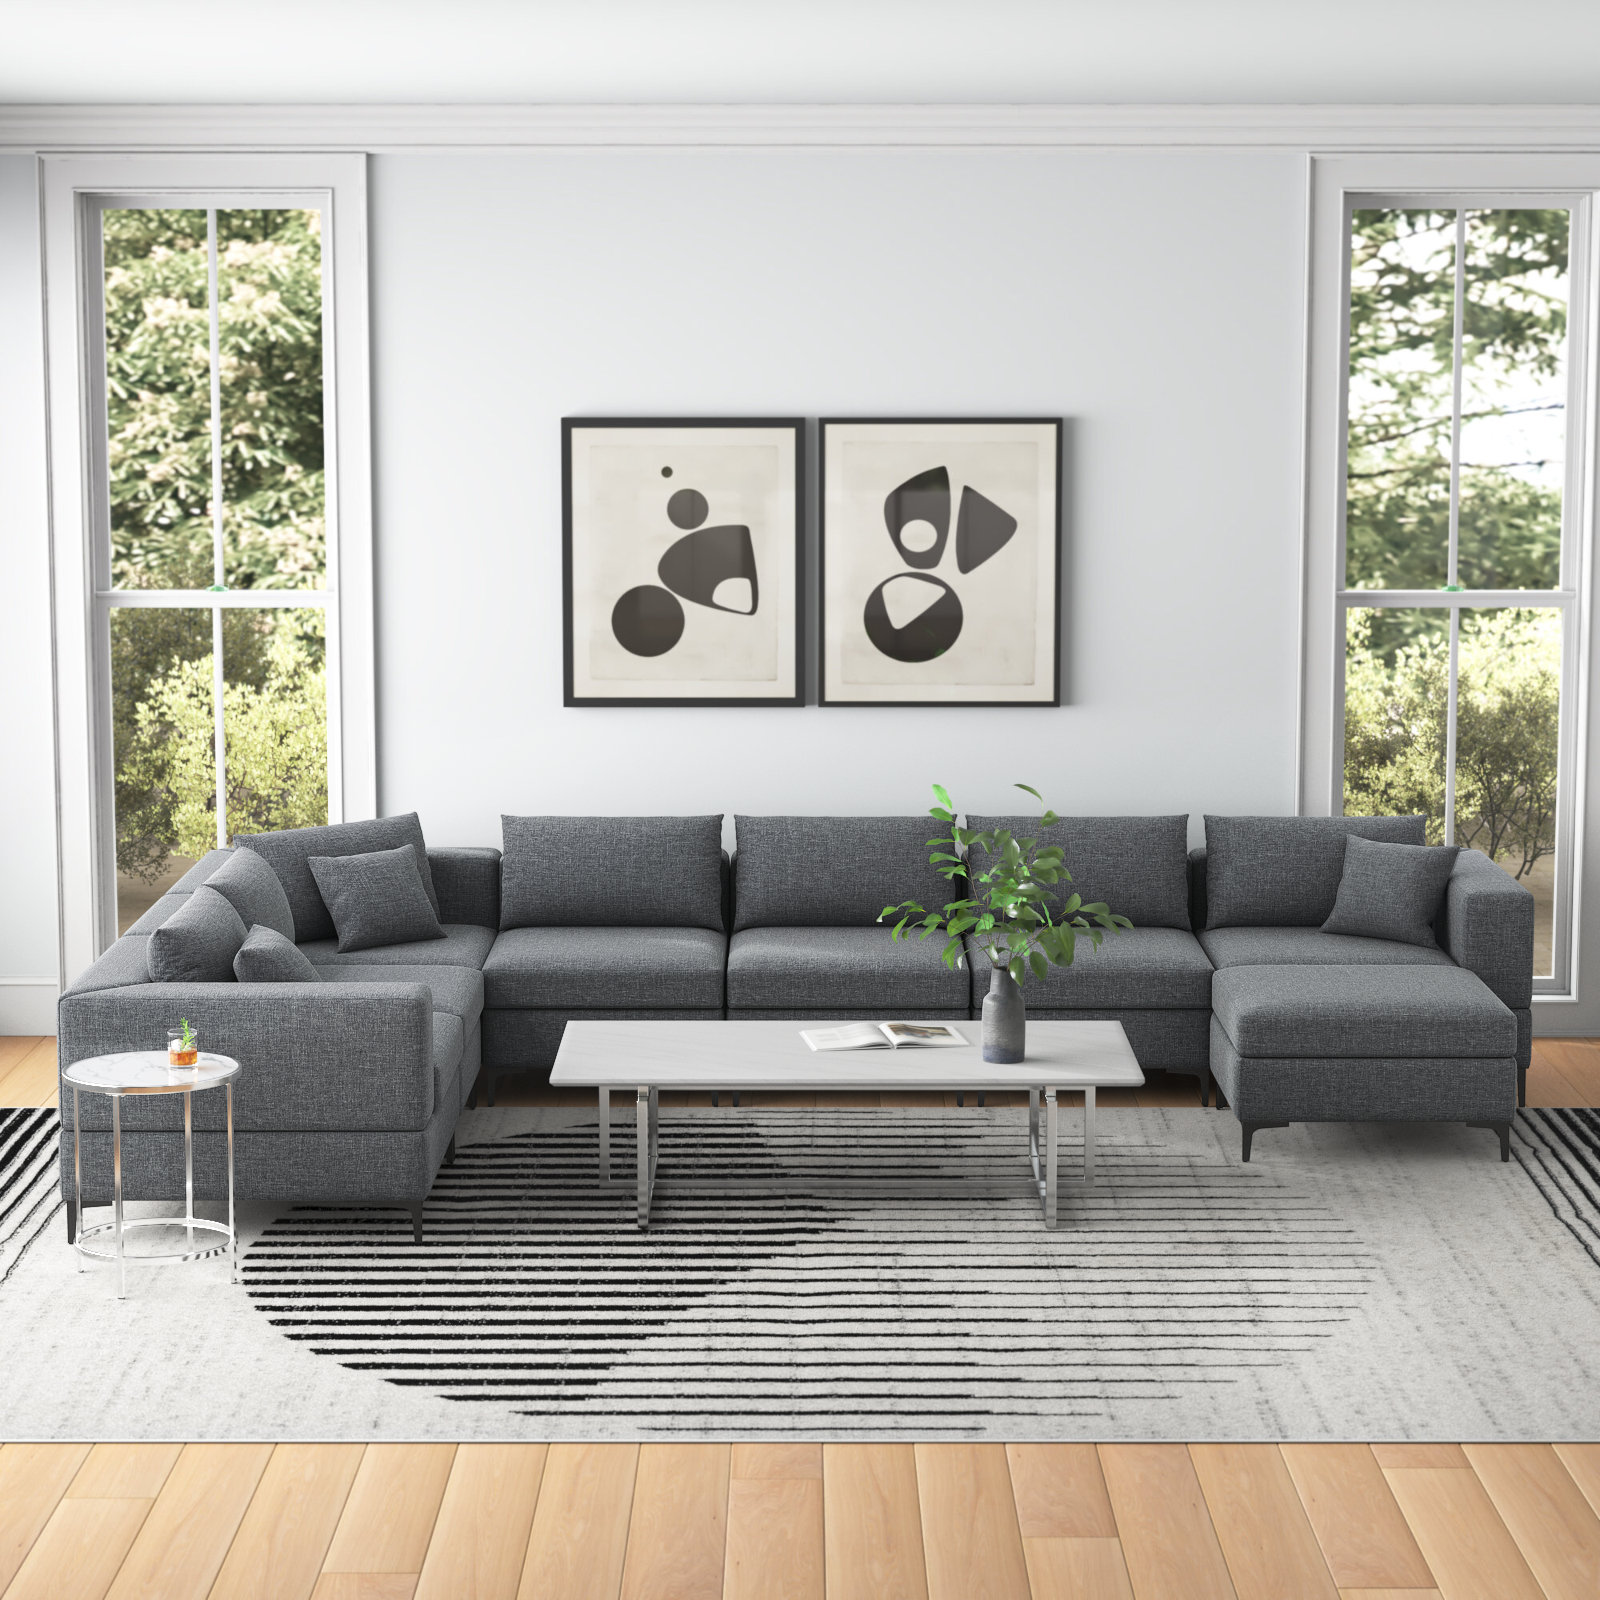 Supersliders 4705395N Furniture Movers & Sliders for Heavy Hard Floor Surfaces 8